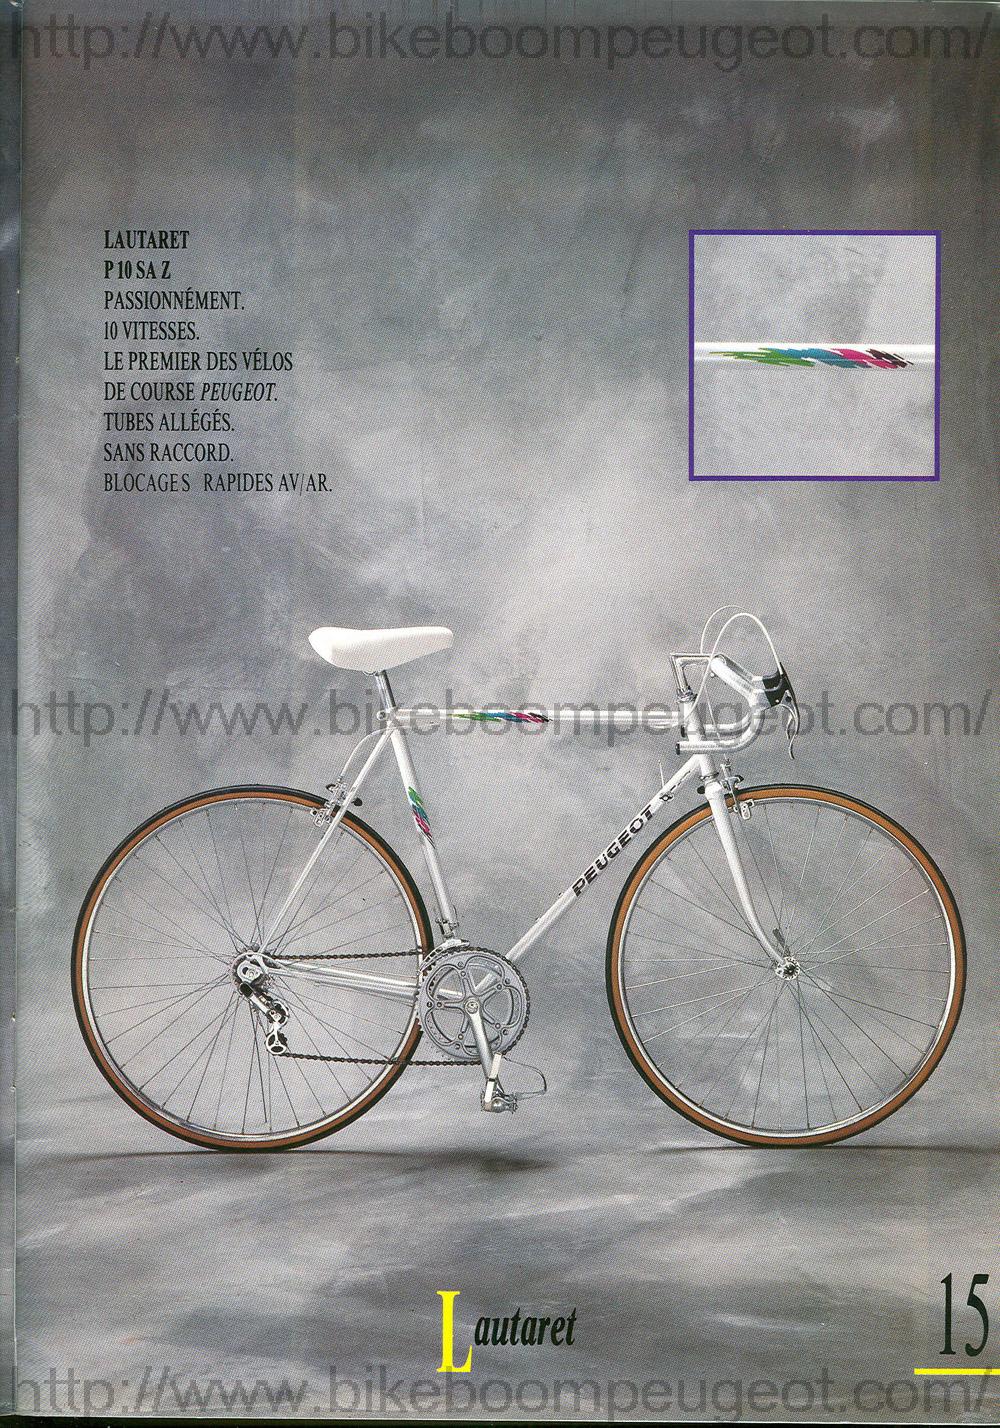 Peugeot_1989_France_Brochure_Lautaret_BikeBoomPeugeot.JPG